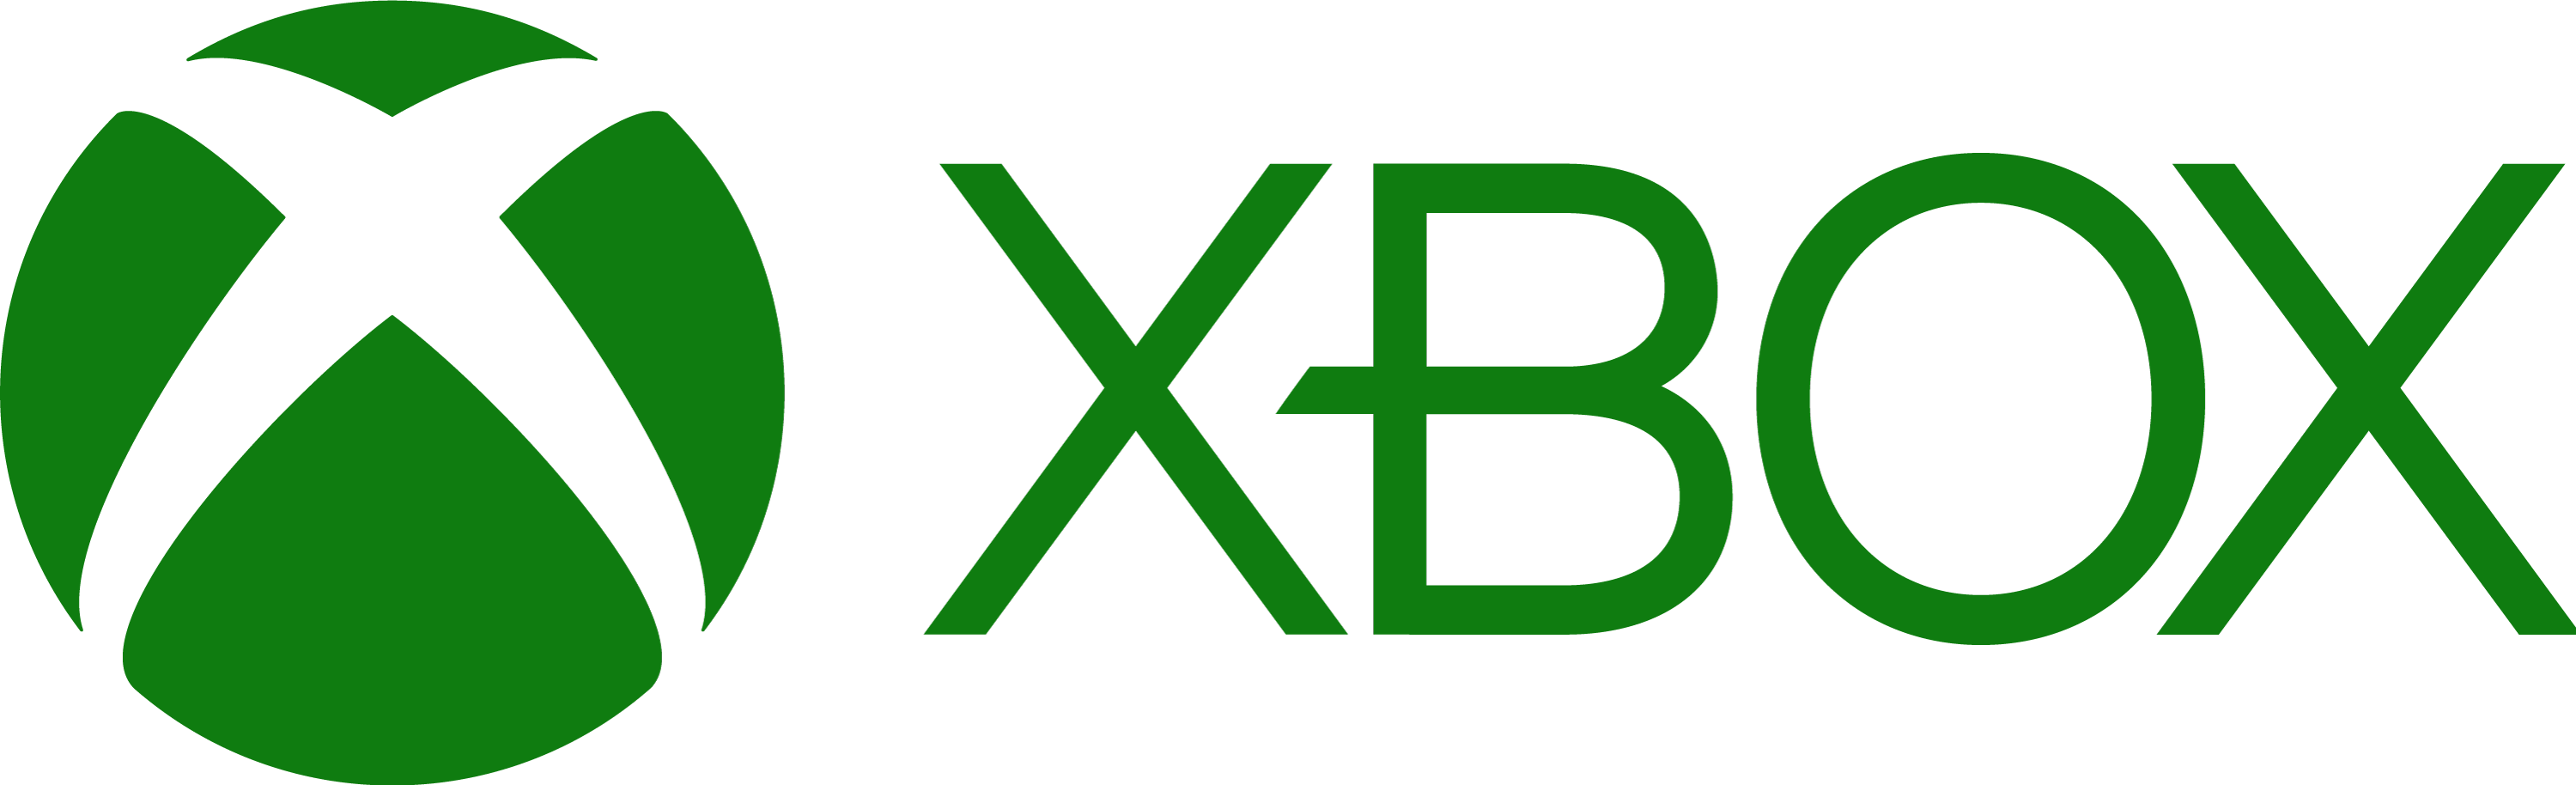 xbox logo png